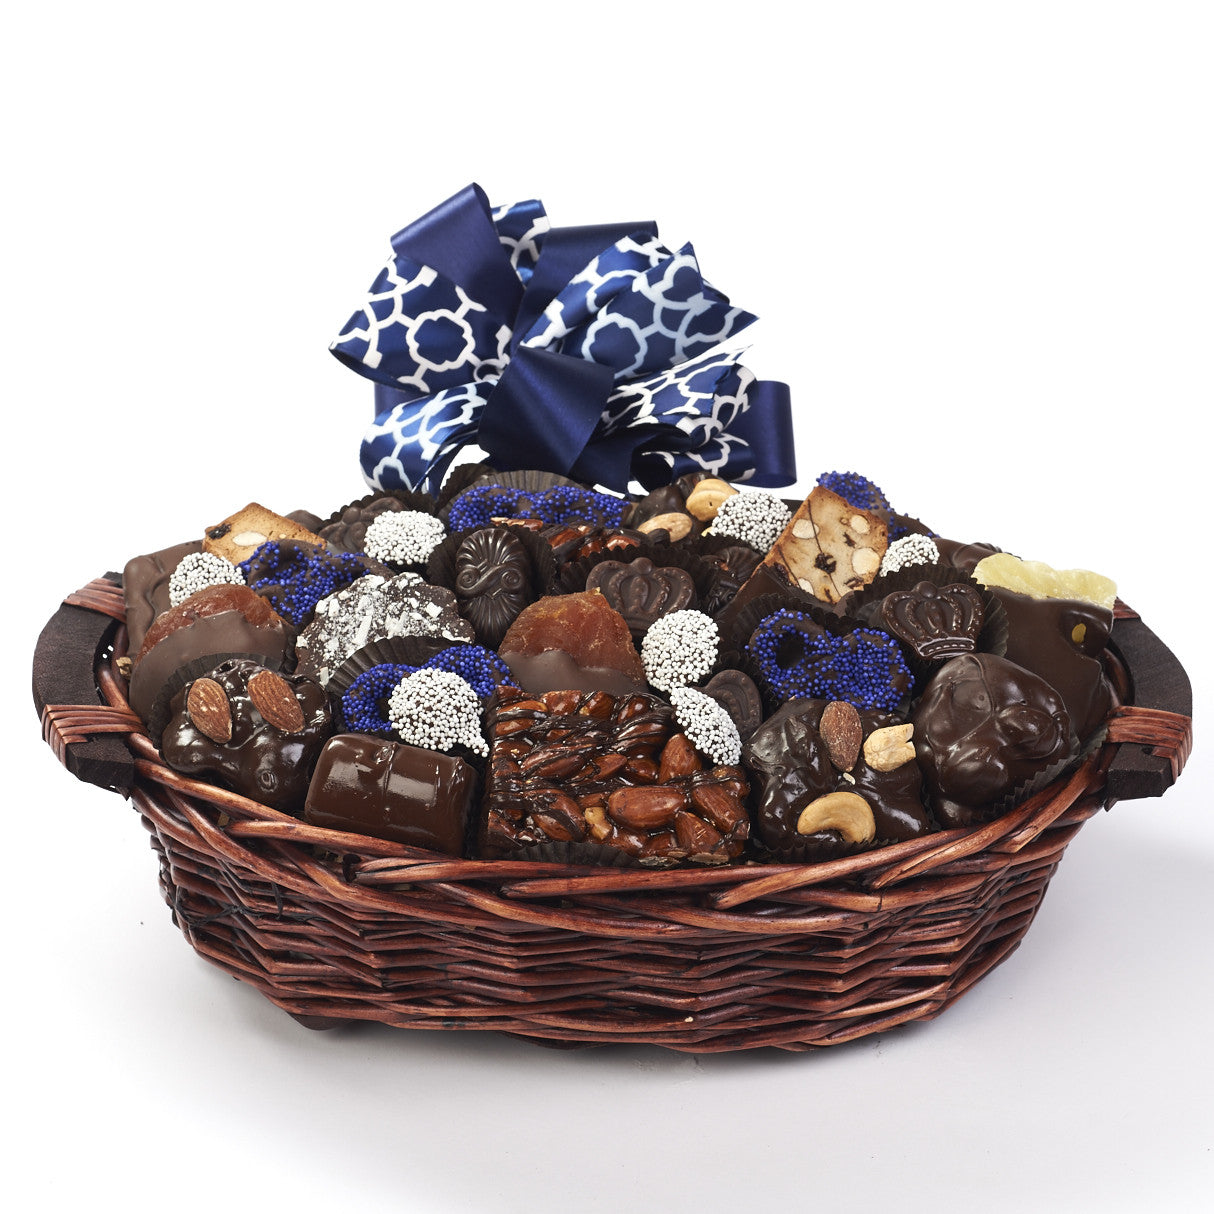 Vegan/Parve Chocolate Gift Basket 2 lb